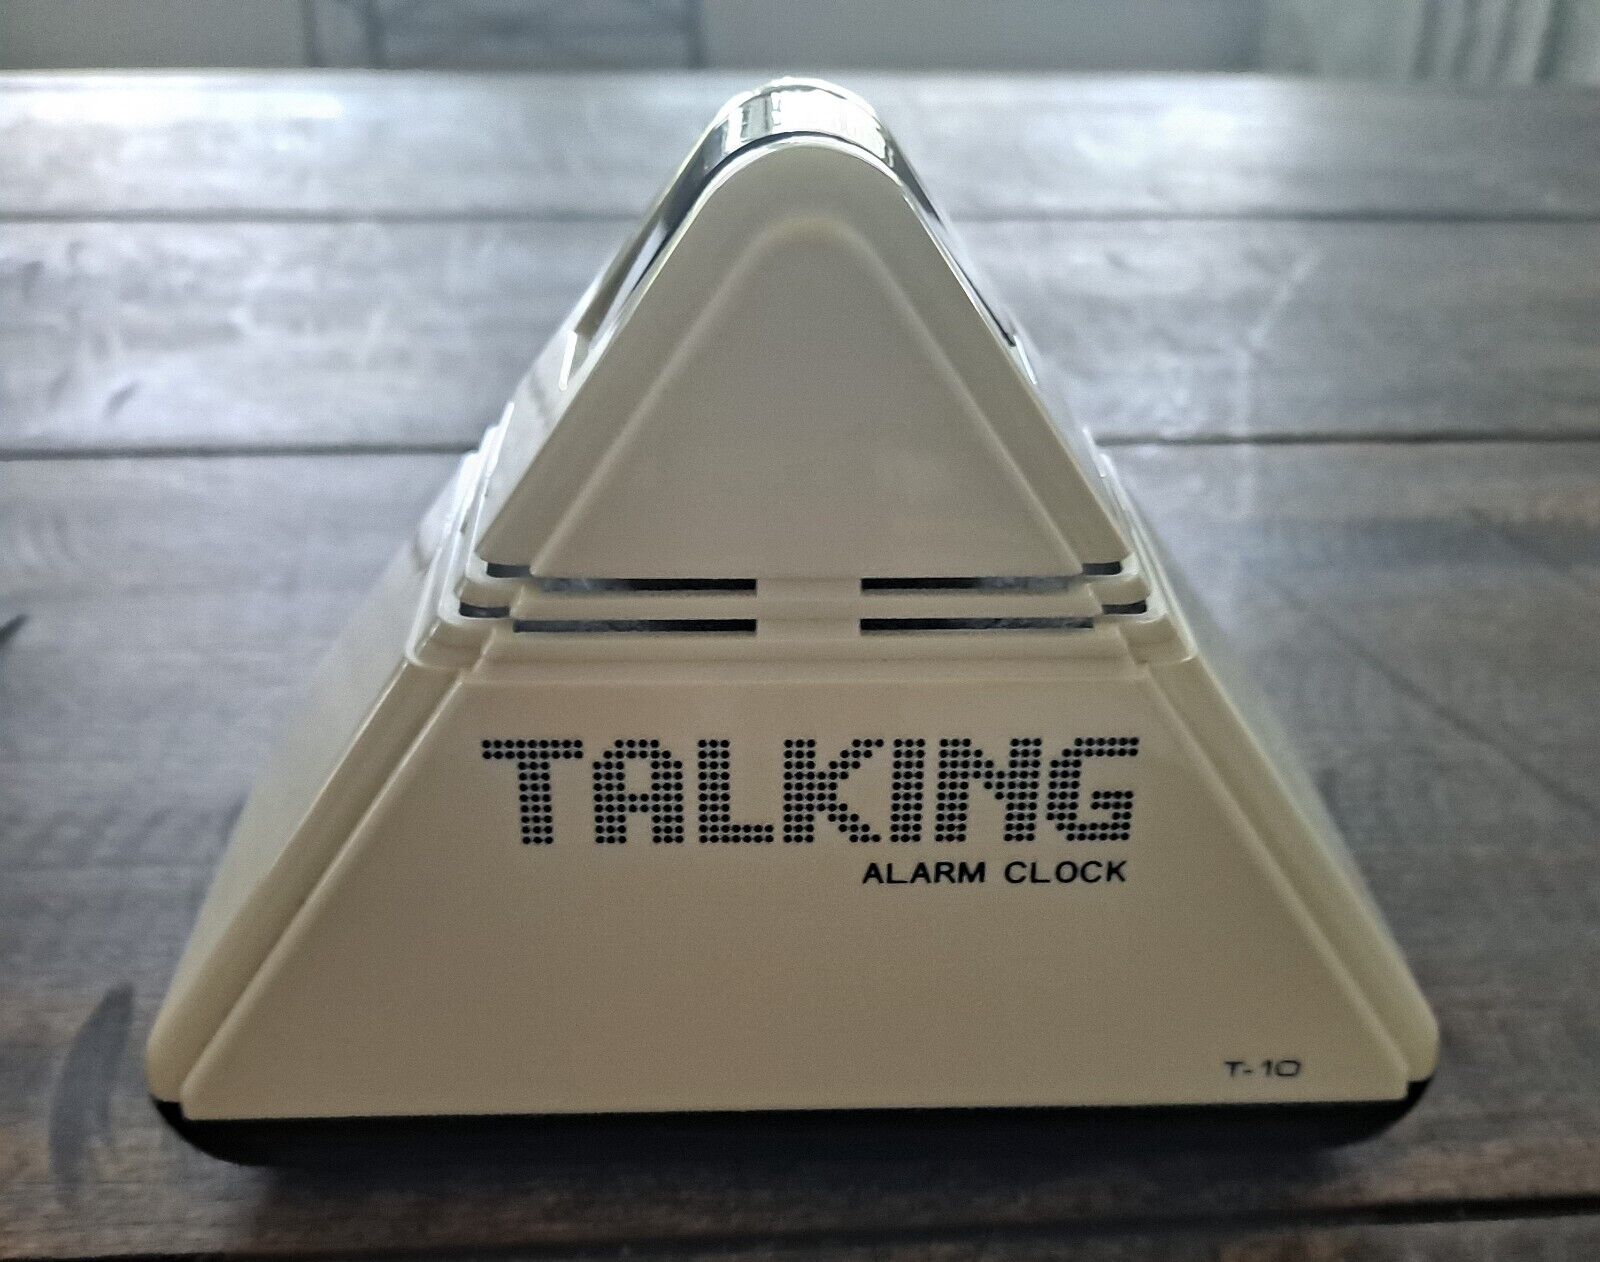 Vintage 80s Talking Alarm Clock T-10 Triangle Pyramid White Black - TESTED